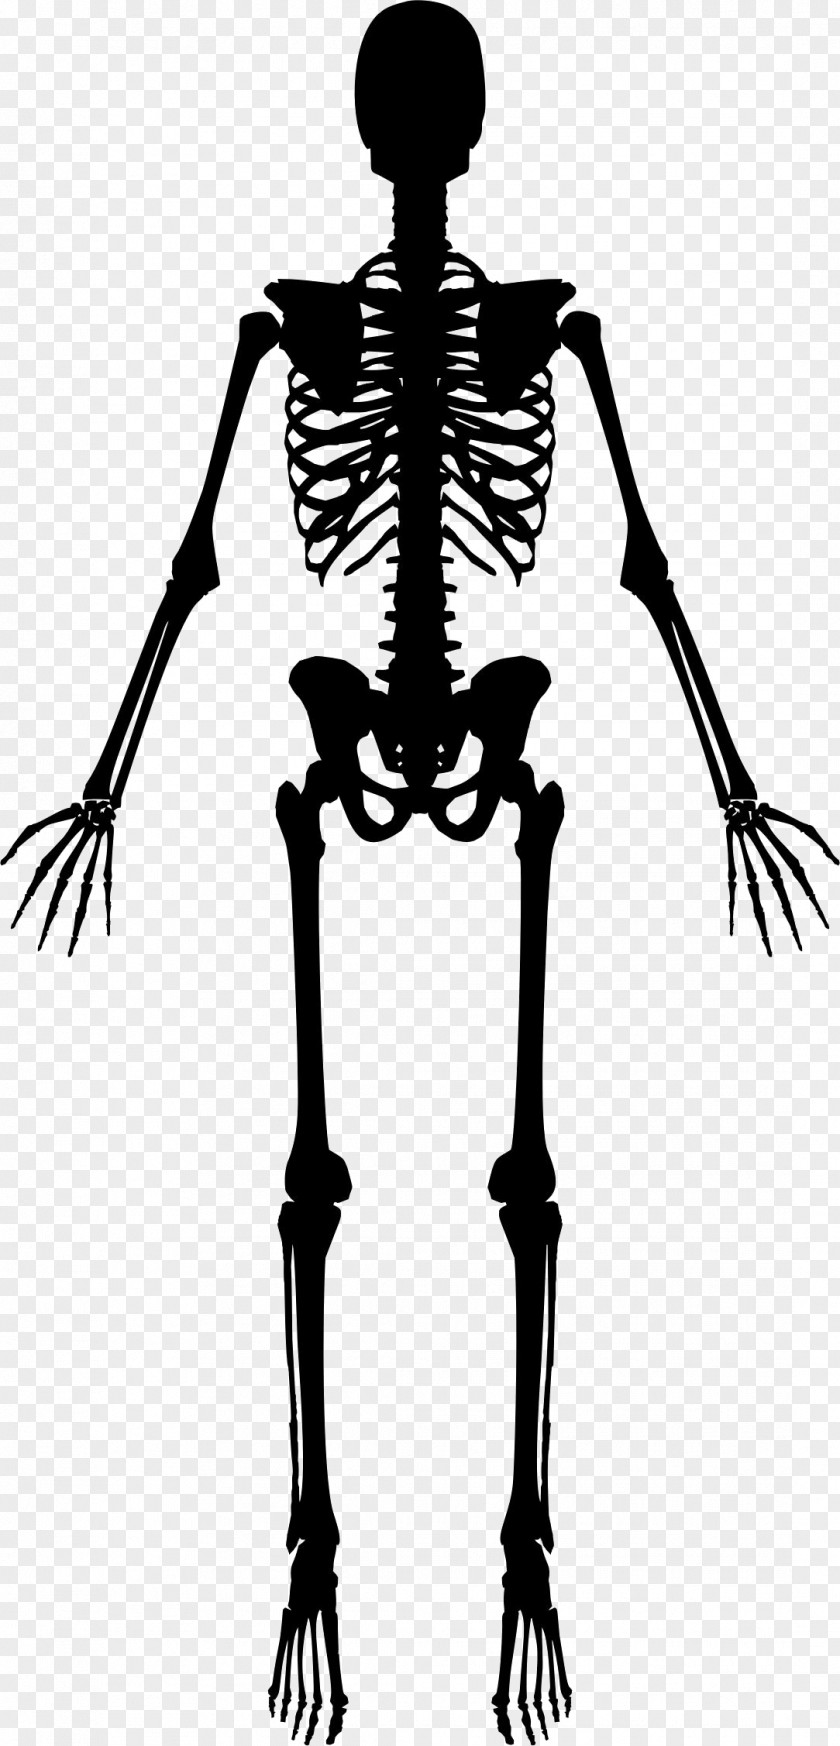 Skeleton Human Vector Graphics Clip Art Skull PNG